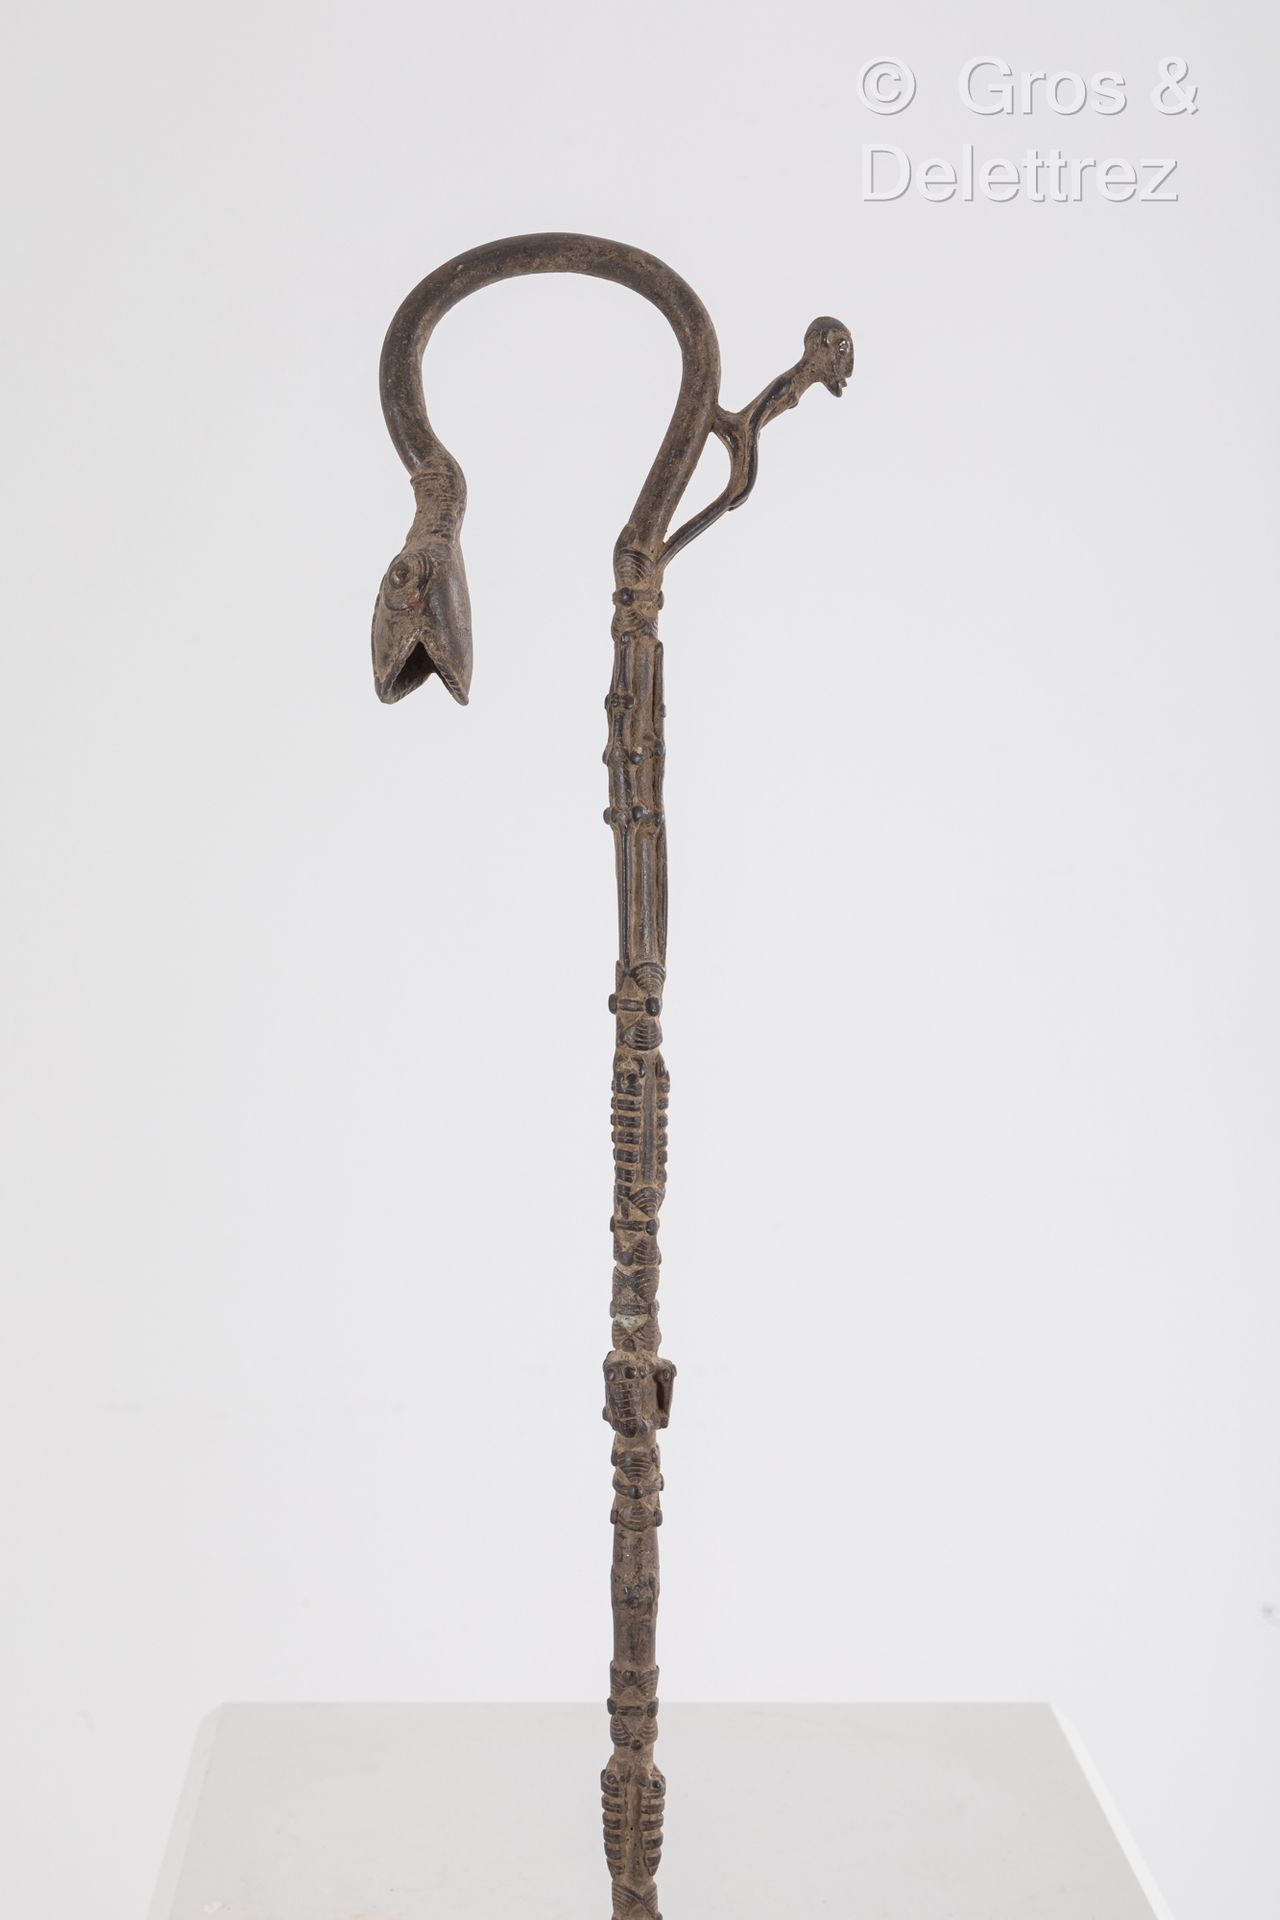 Null 三根带有牛头和蛇头的青铜手杖。
高度：82厘米。